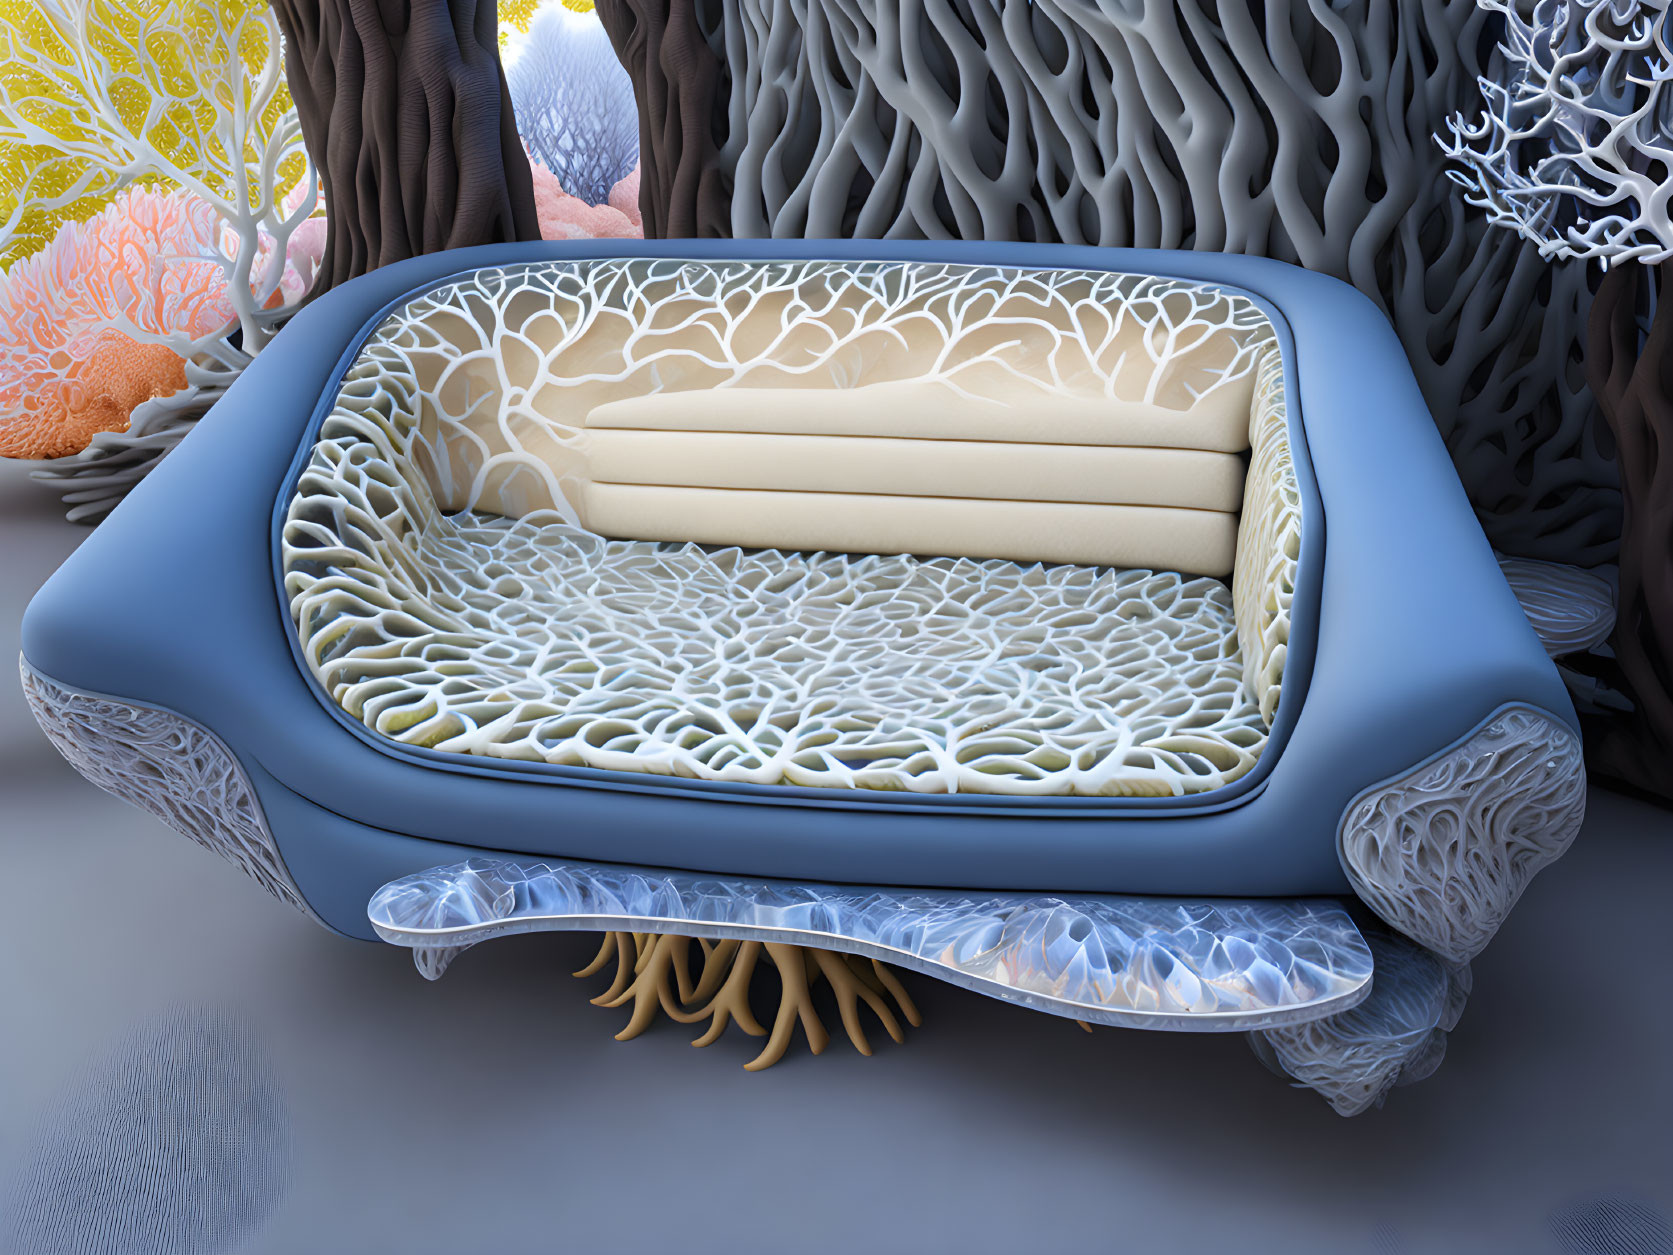 Biomorphic sofa bed